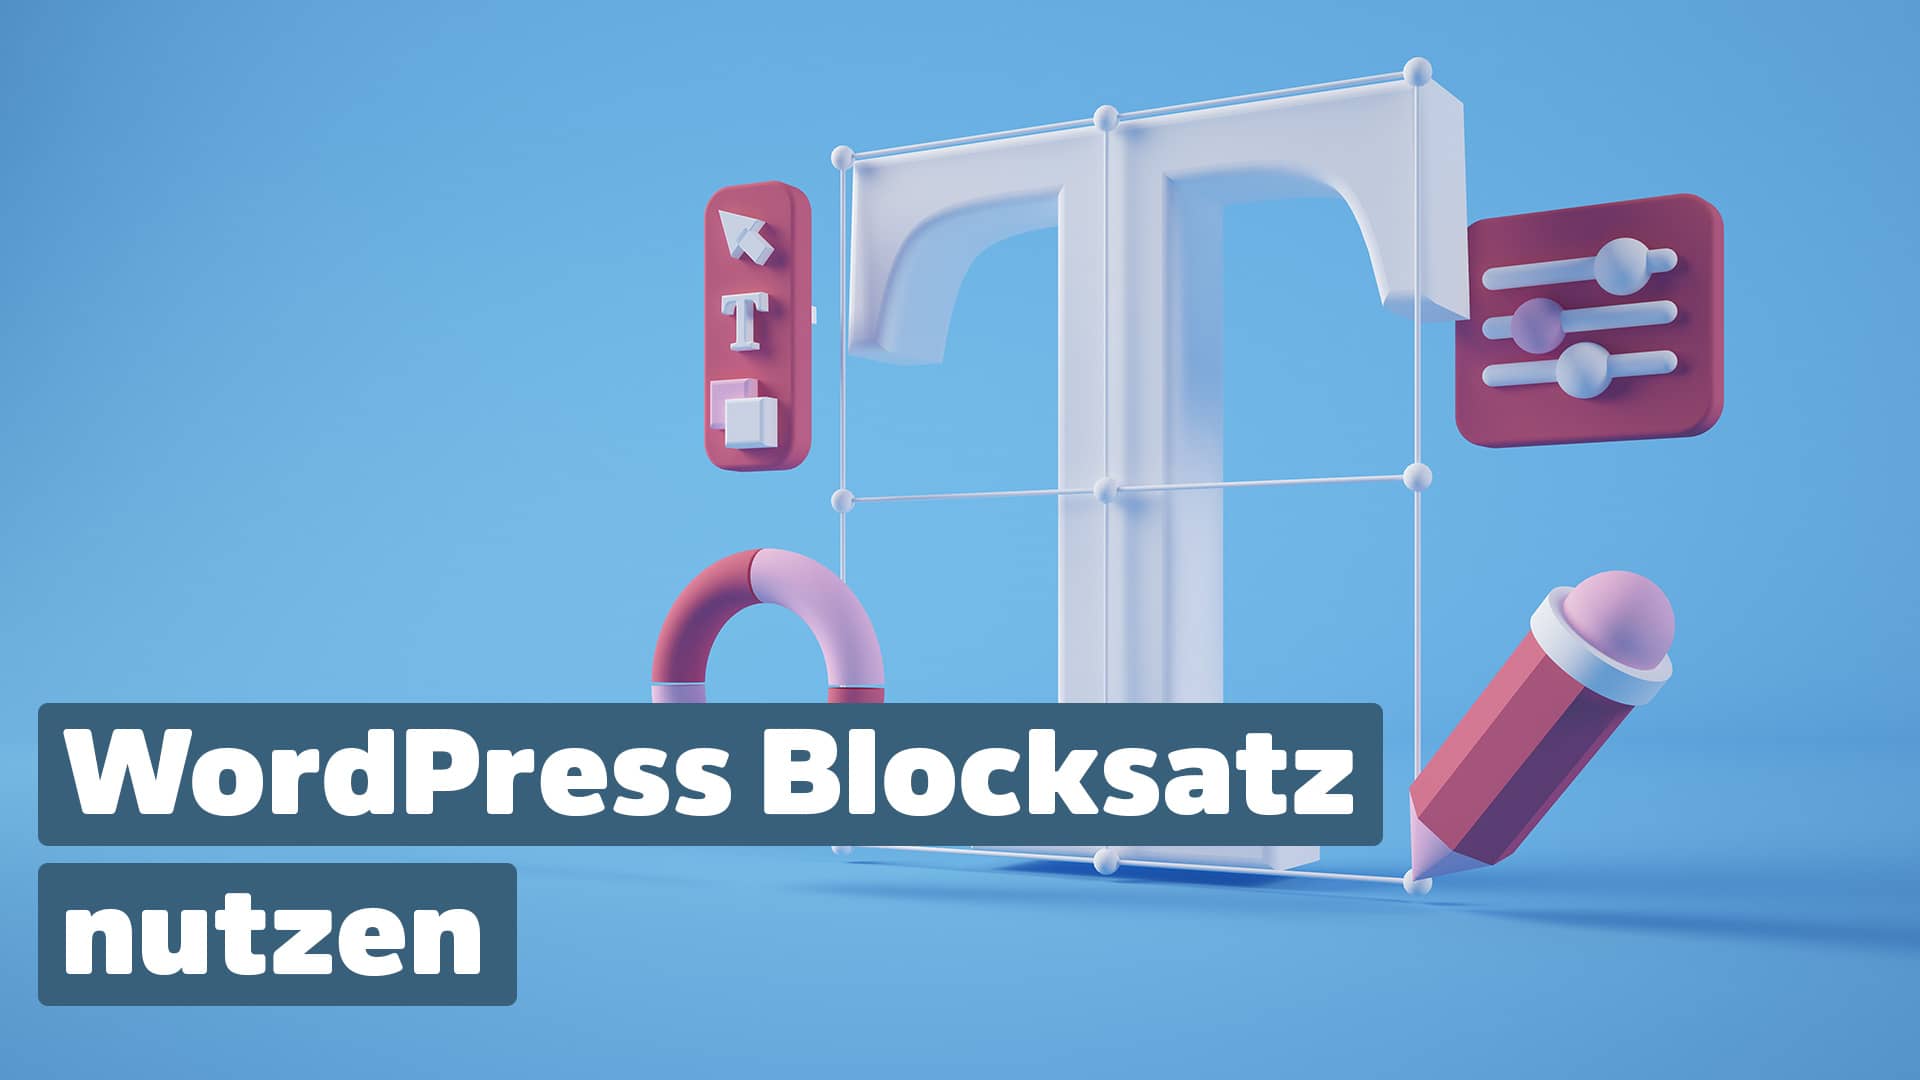 WordPress Blocksatz